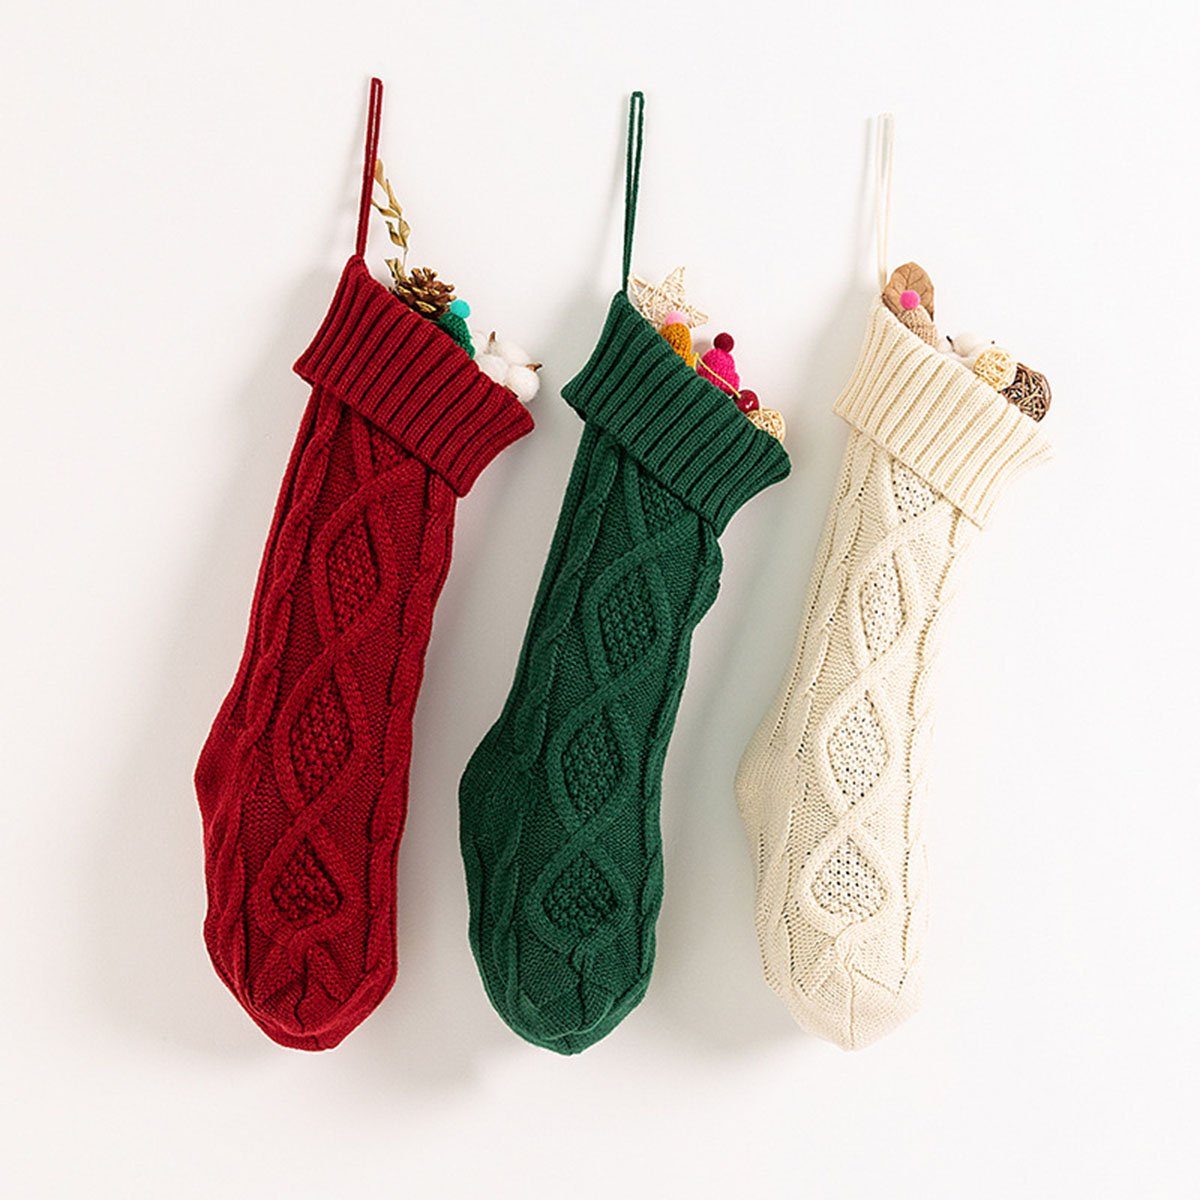 CTGtree Nikolausstiefel 3 (3 Hanging Socks St) Geschenk Weihnachtsstrumpf Tasche